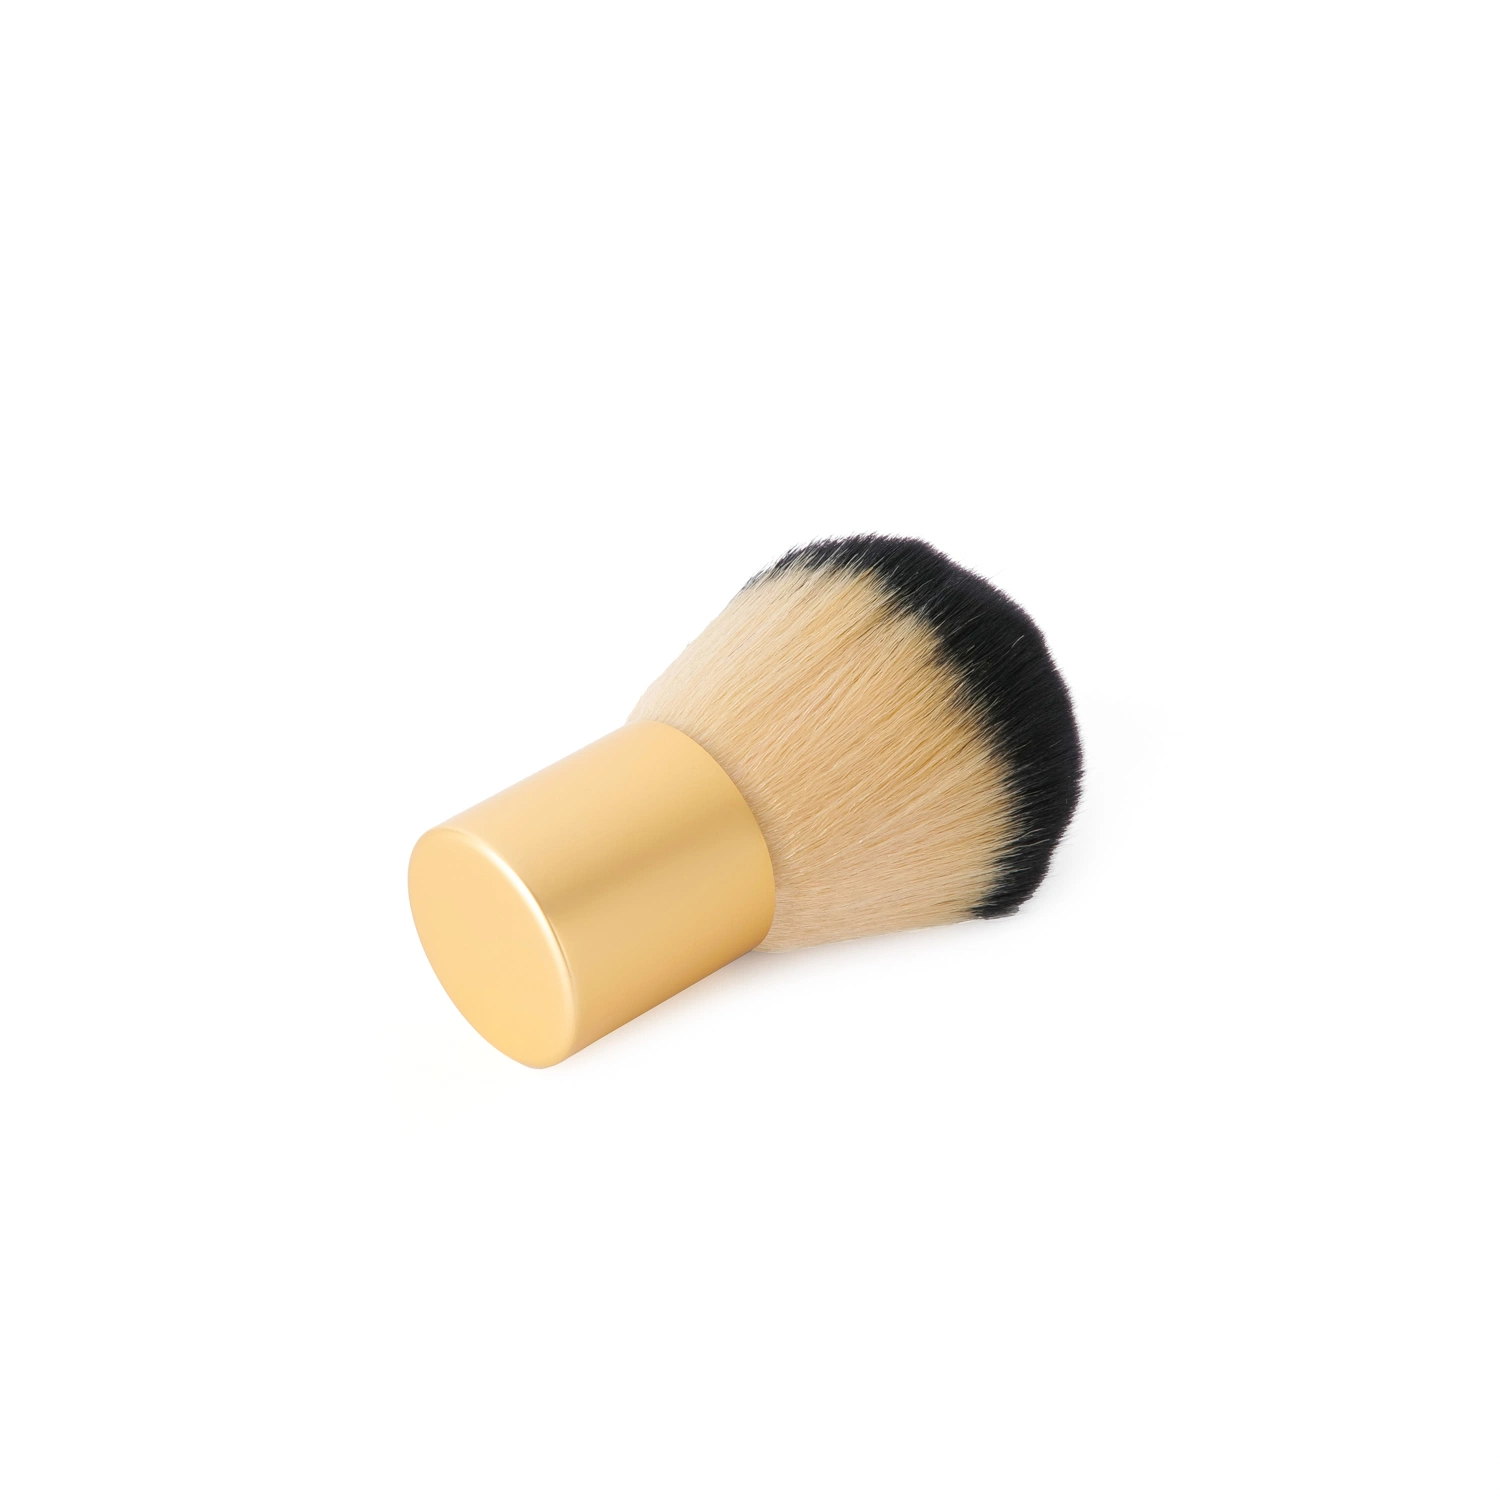 Private Label Custom Face Brush Flat Top Kabuki Foundation Makeup Brush Cosmetics Brushes for Beauty Tools